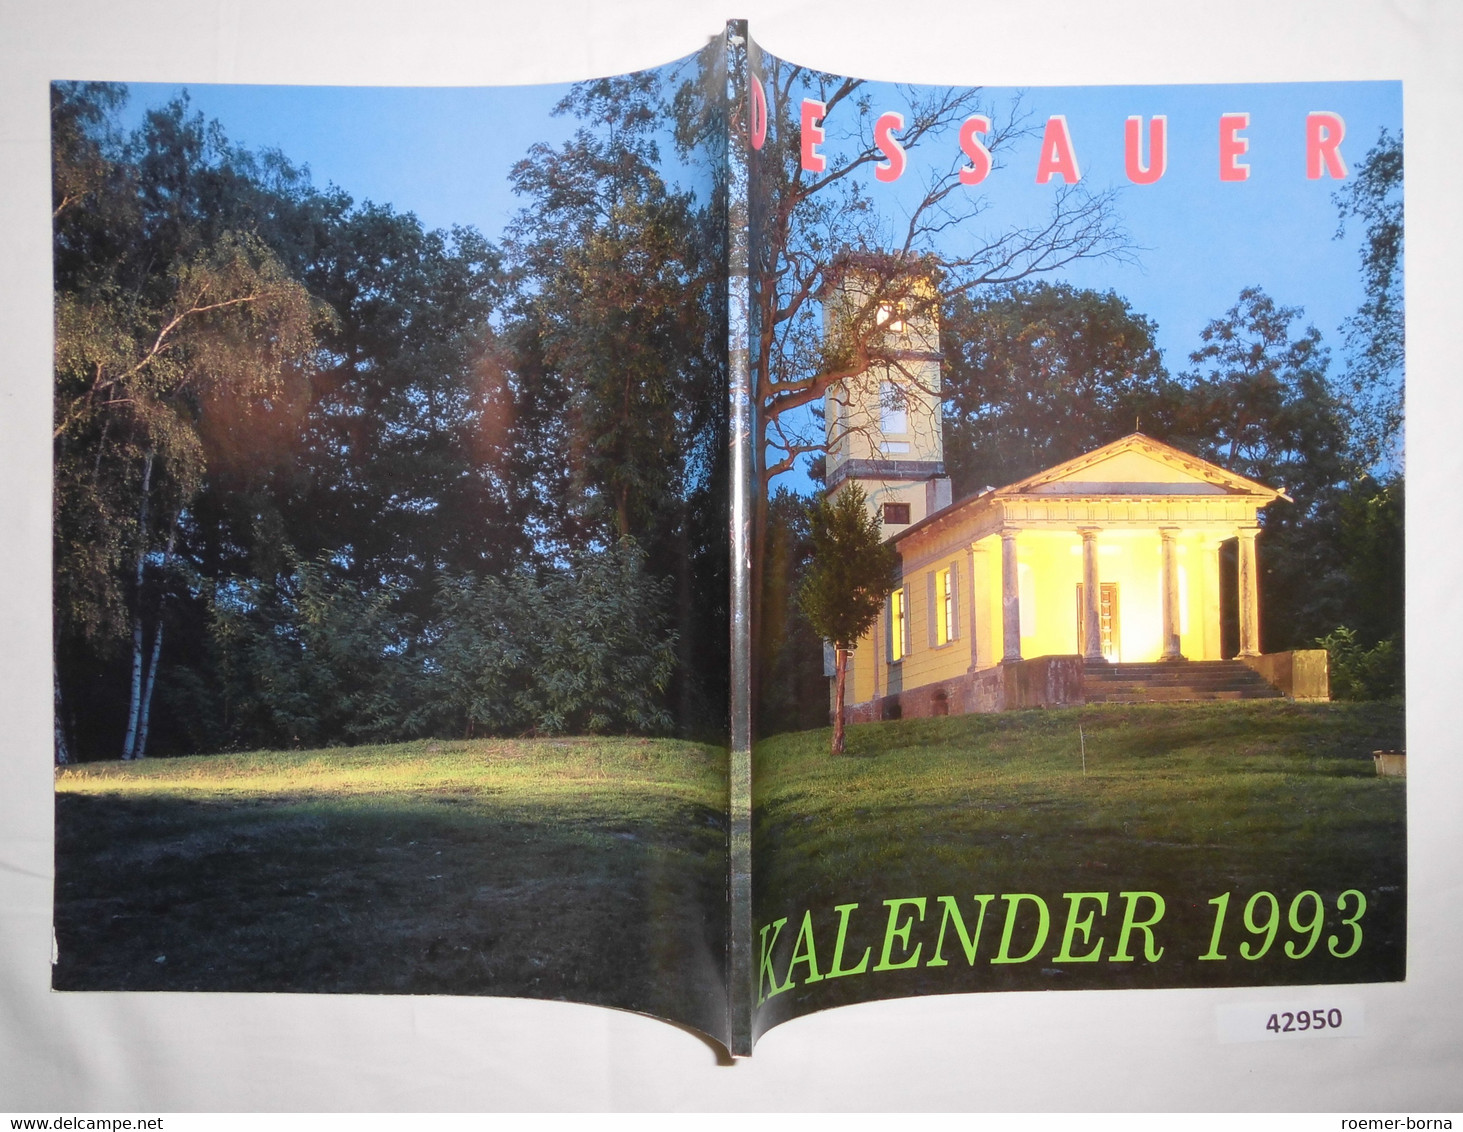 Dessauer Kalender 1993 (37. Jahrgang) - Kalenders